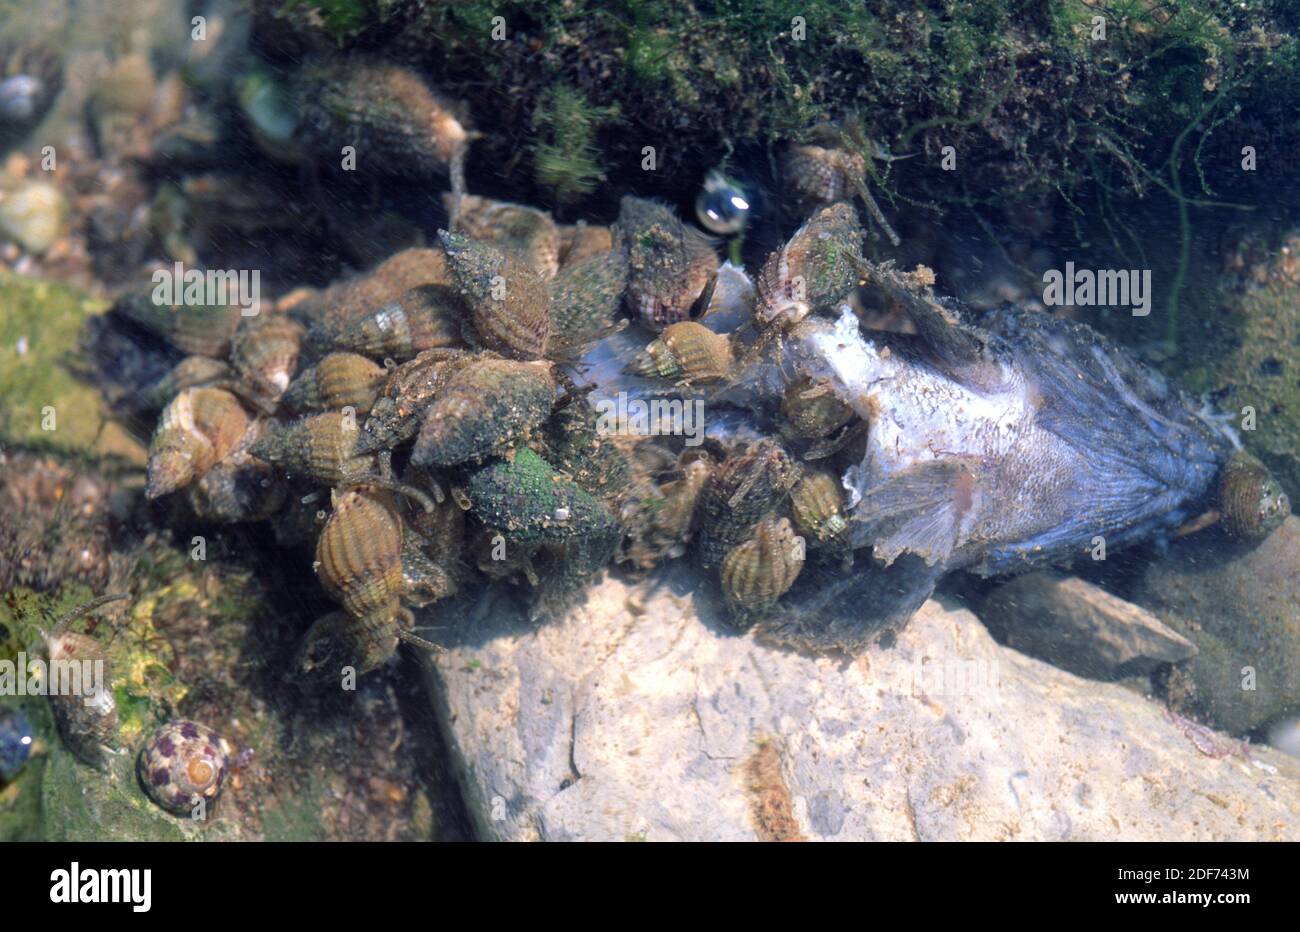 Thick-lipped dogwhelk (Hinia incrassata or Tritia incrassata) is a carnivorous marine snail. This photo was taken in Saint Jean de Luz coast, France. Stock Photo